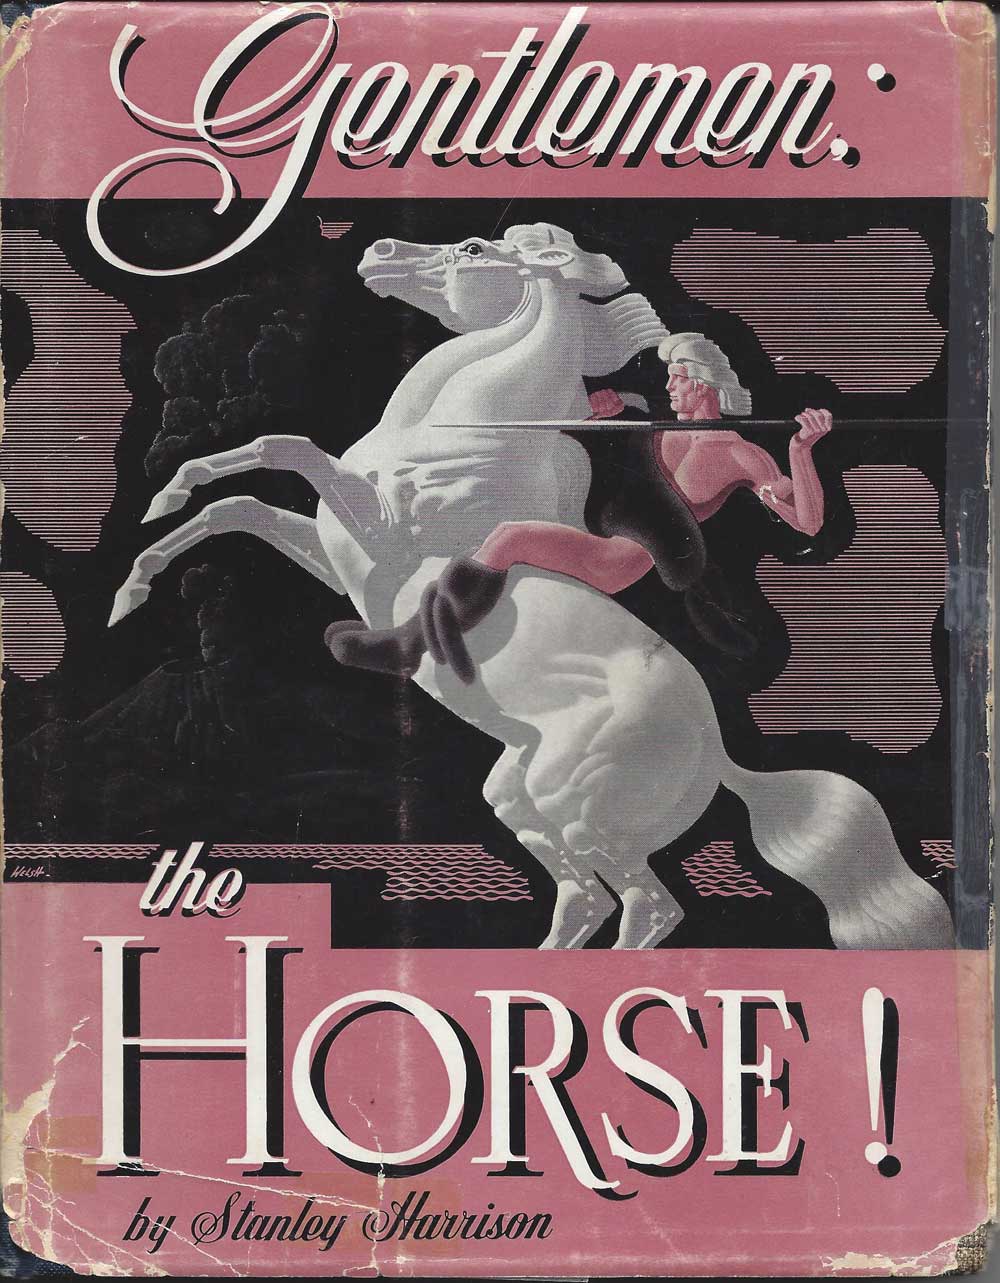 Gentlemen: the Horse. By Stanley Harrison.